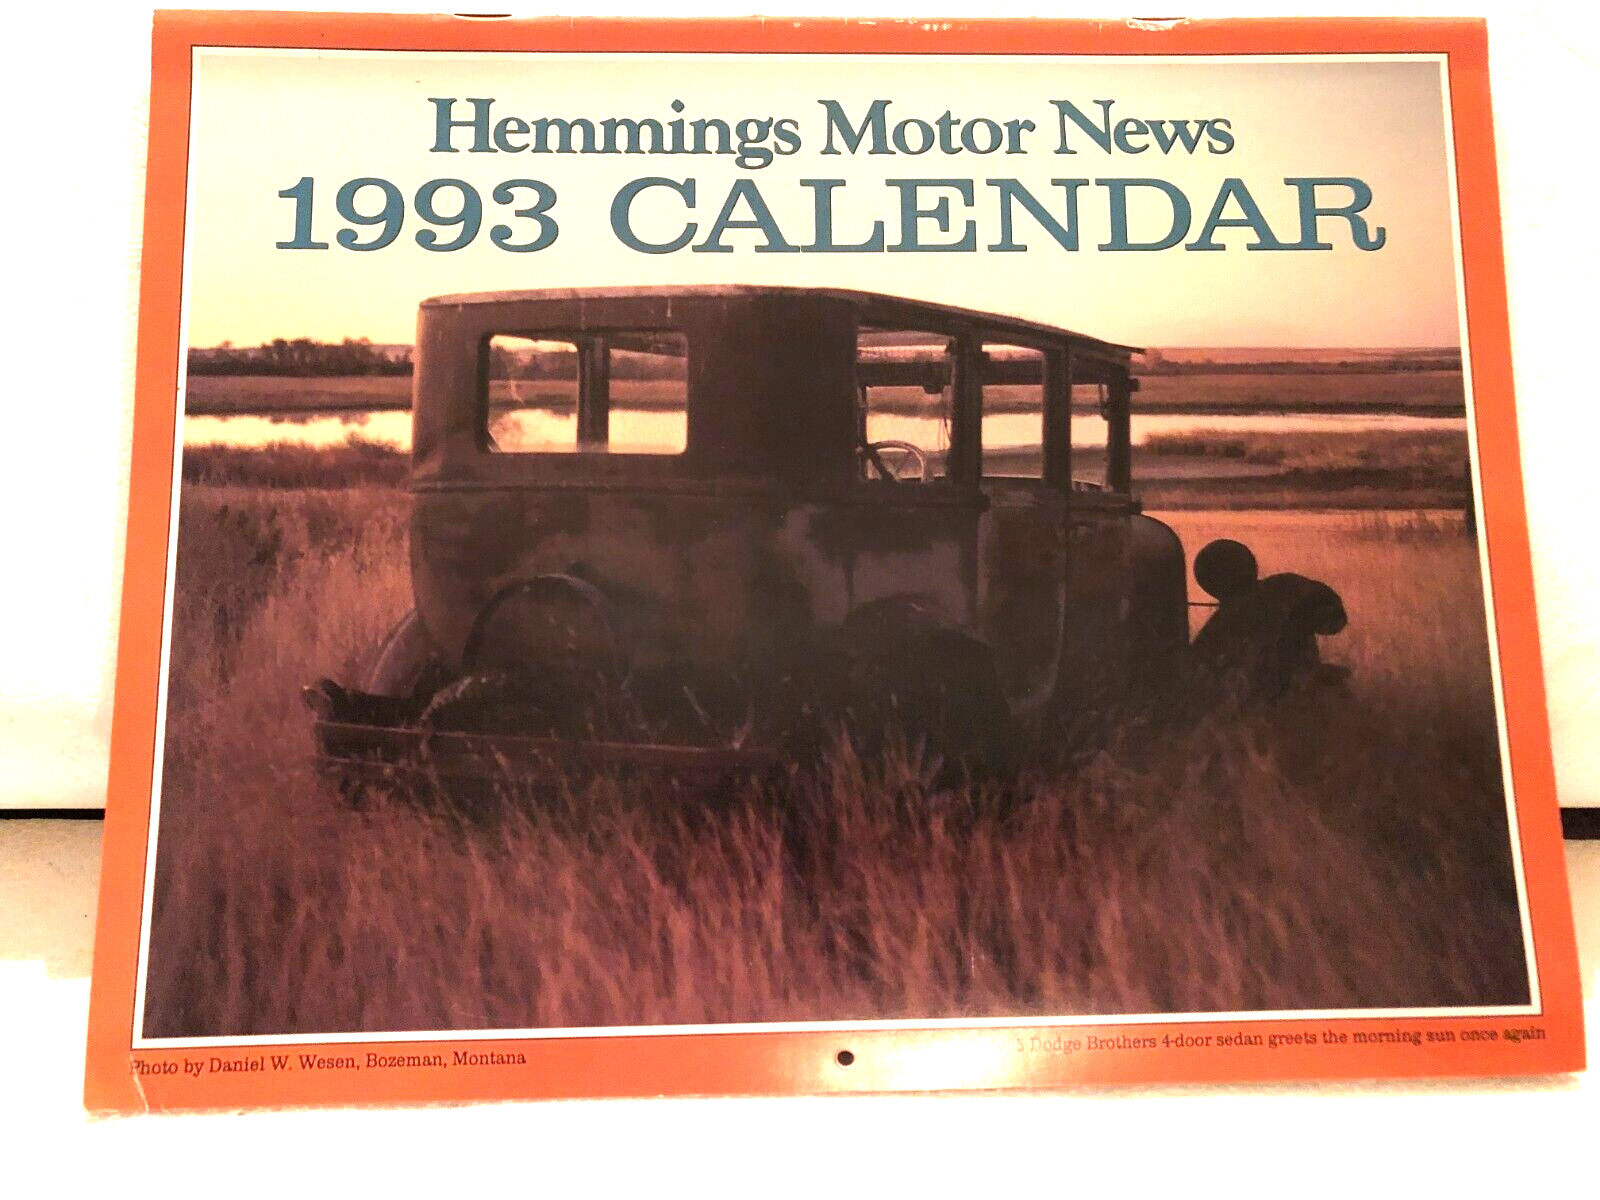 HEMMINGS MOTOR NEWS ABANDONED VEHICLES CALENDAR 1993